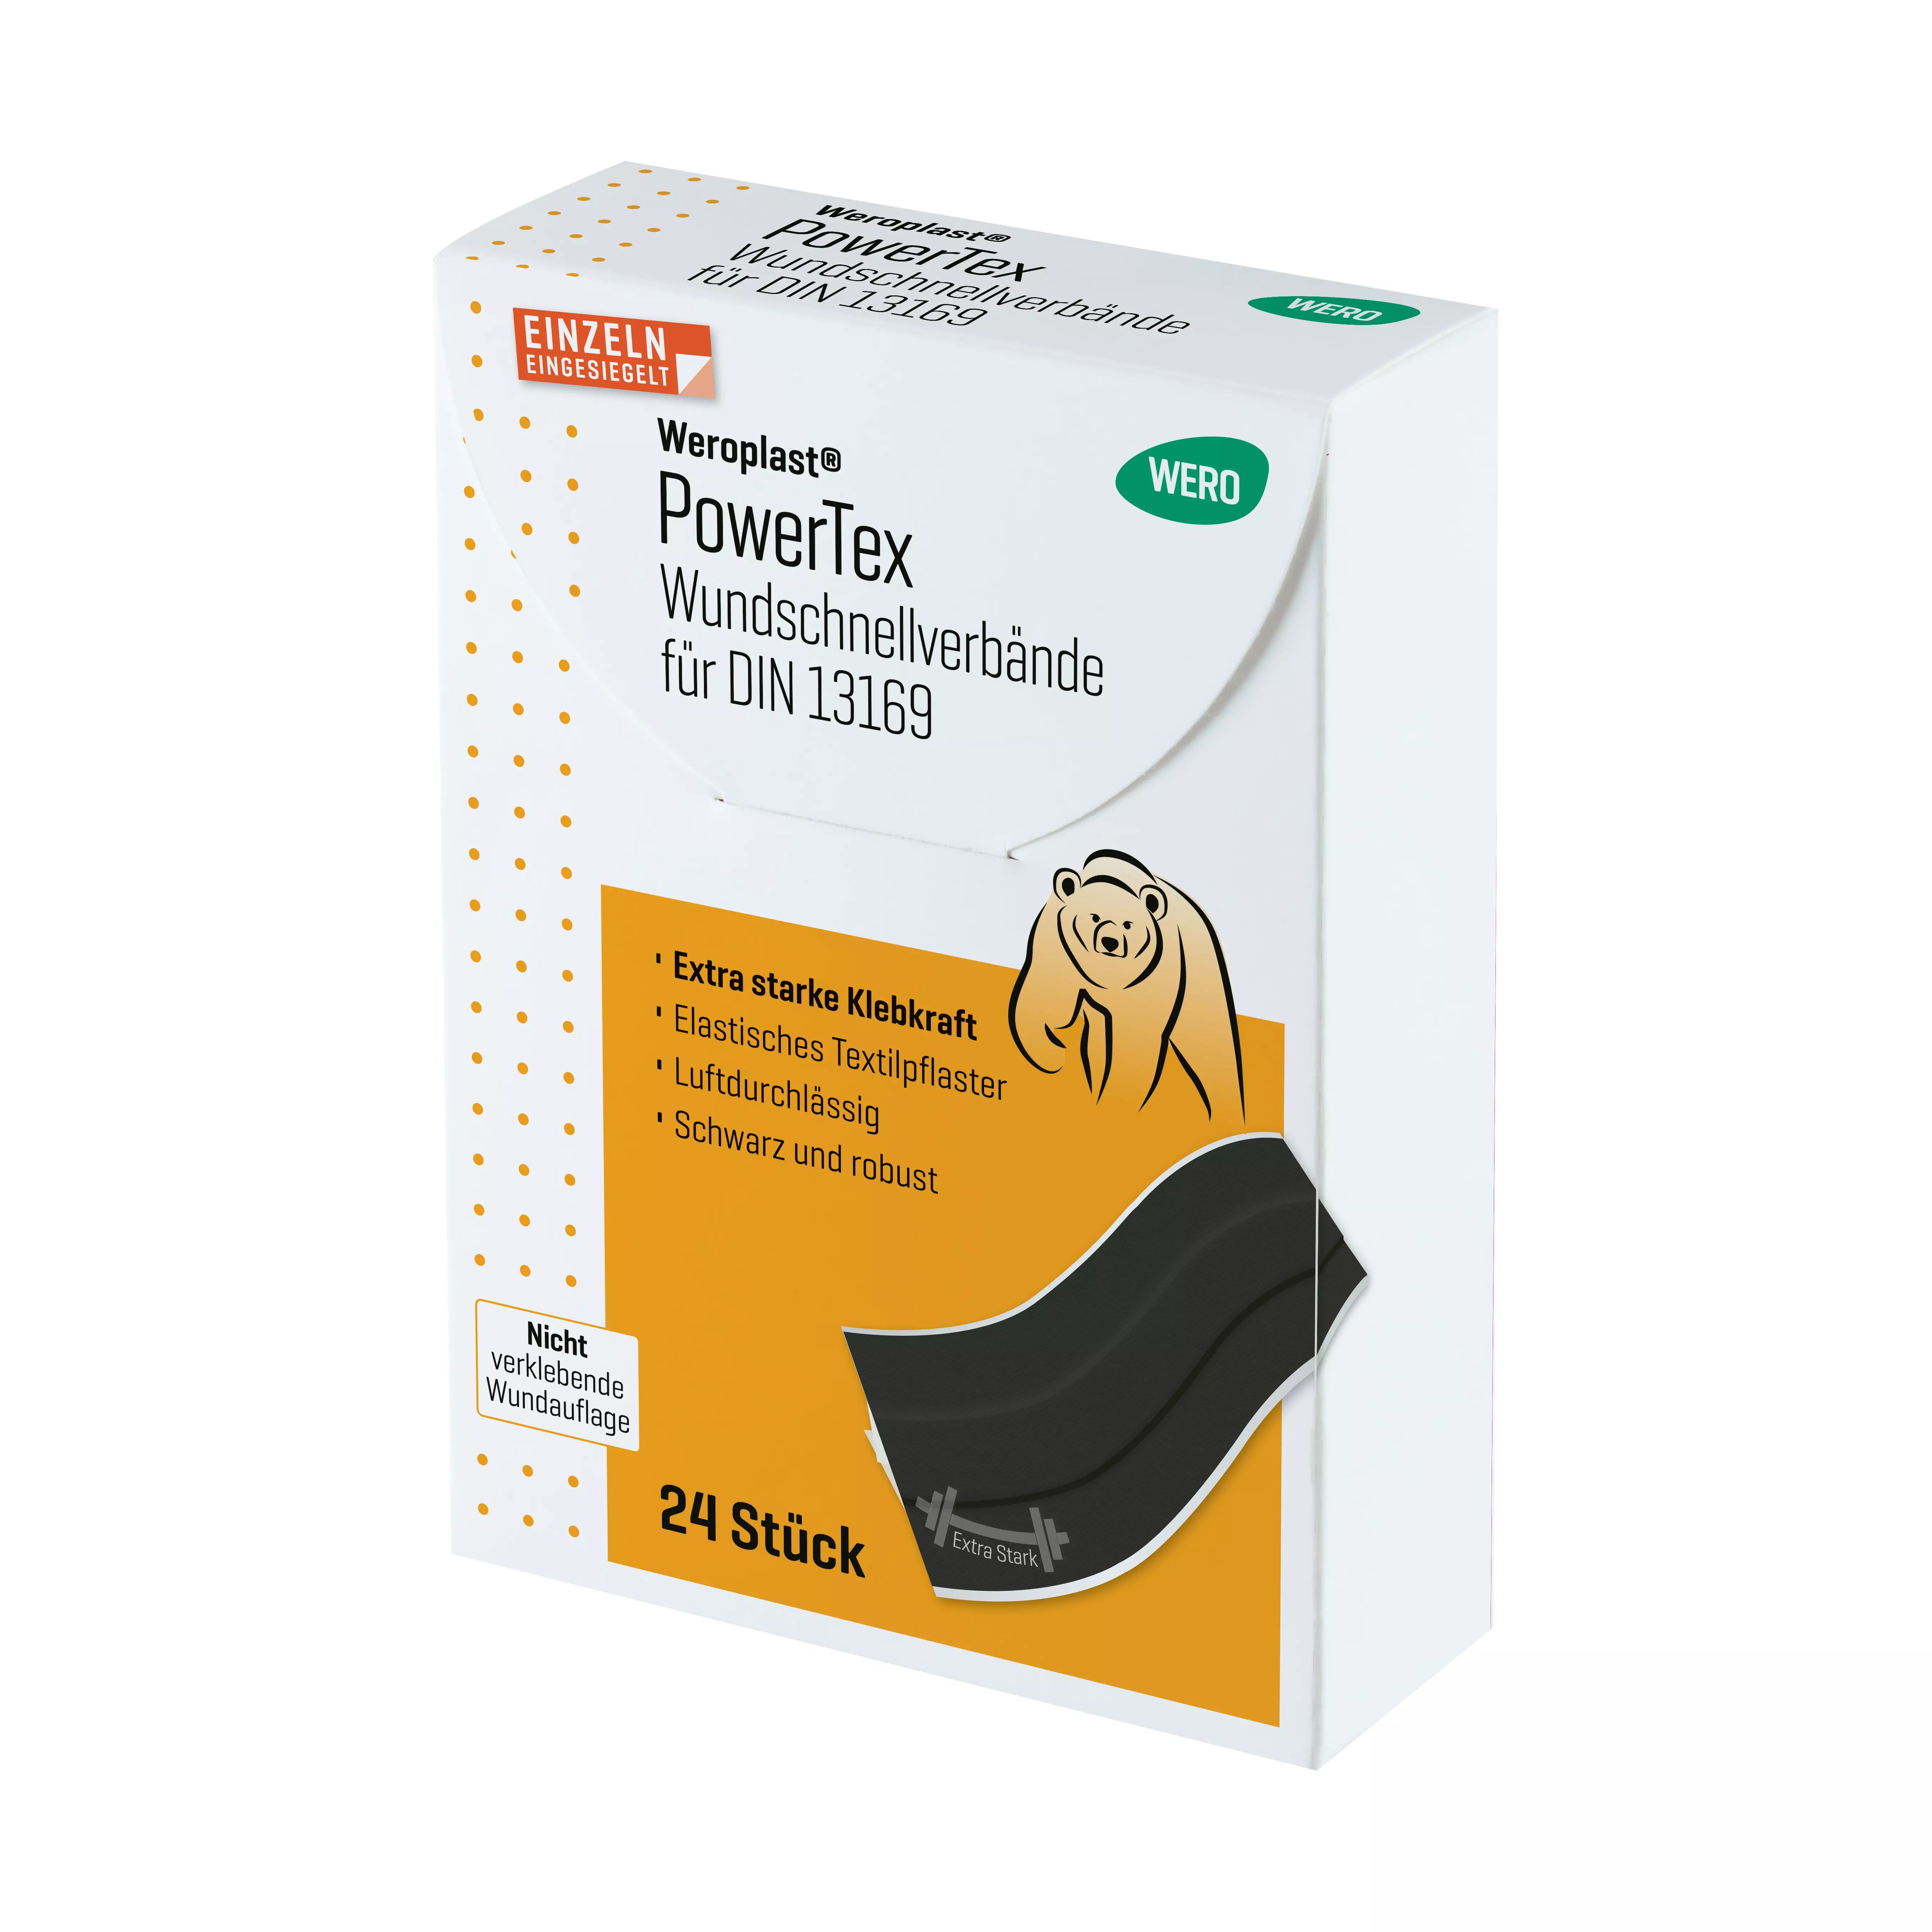 Weroplast® PowerTex plasters - Quick wound dressings DIN 13169